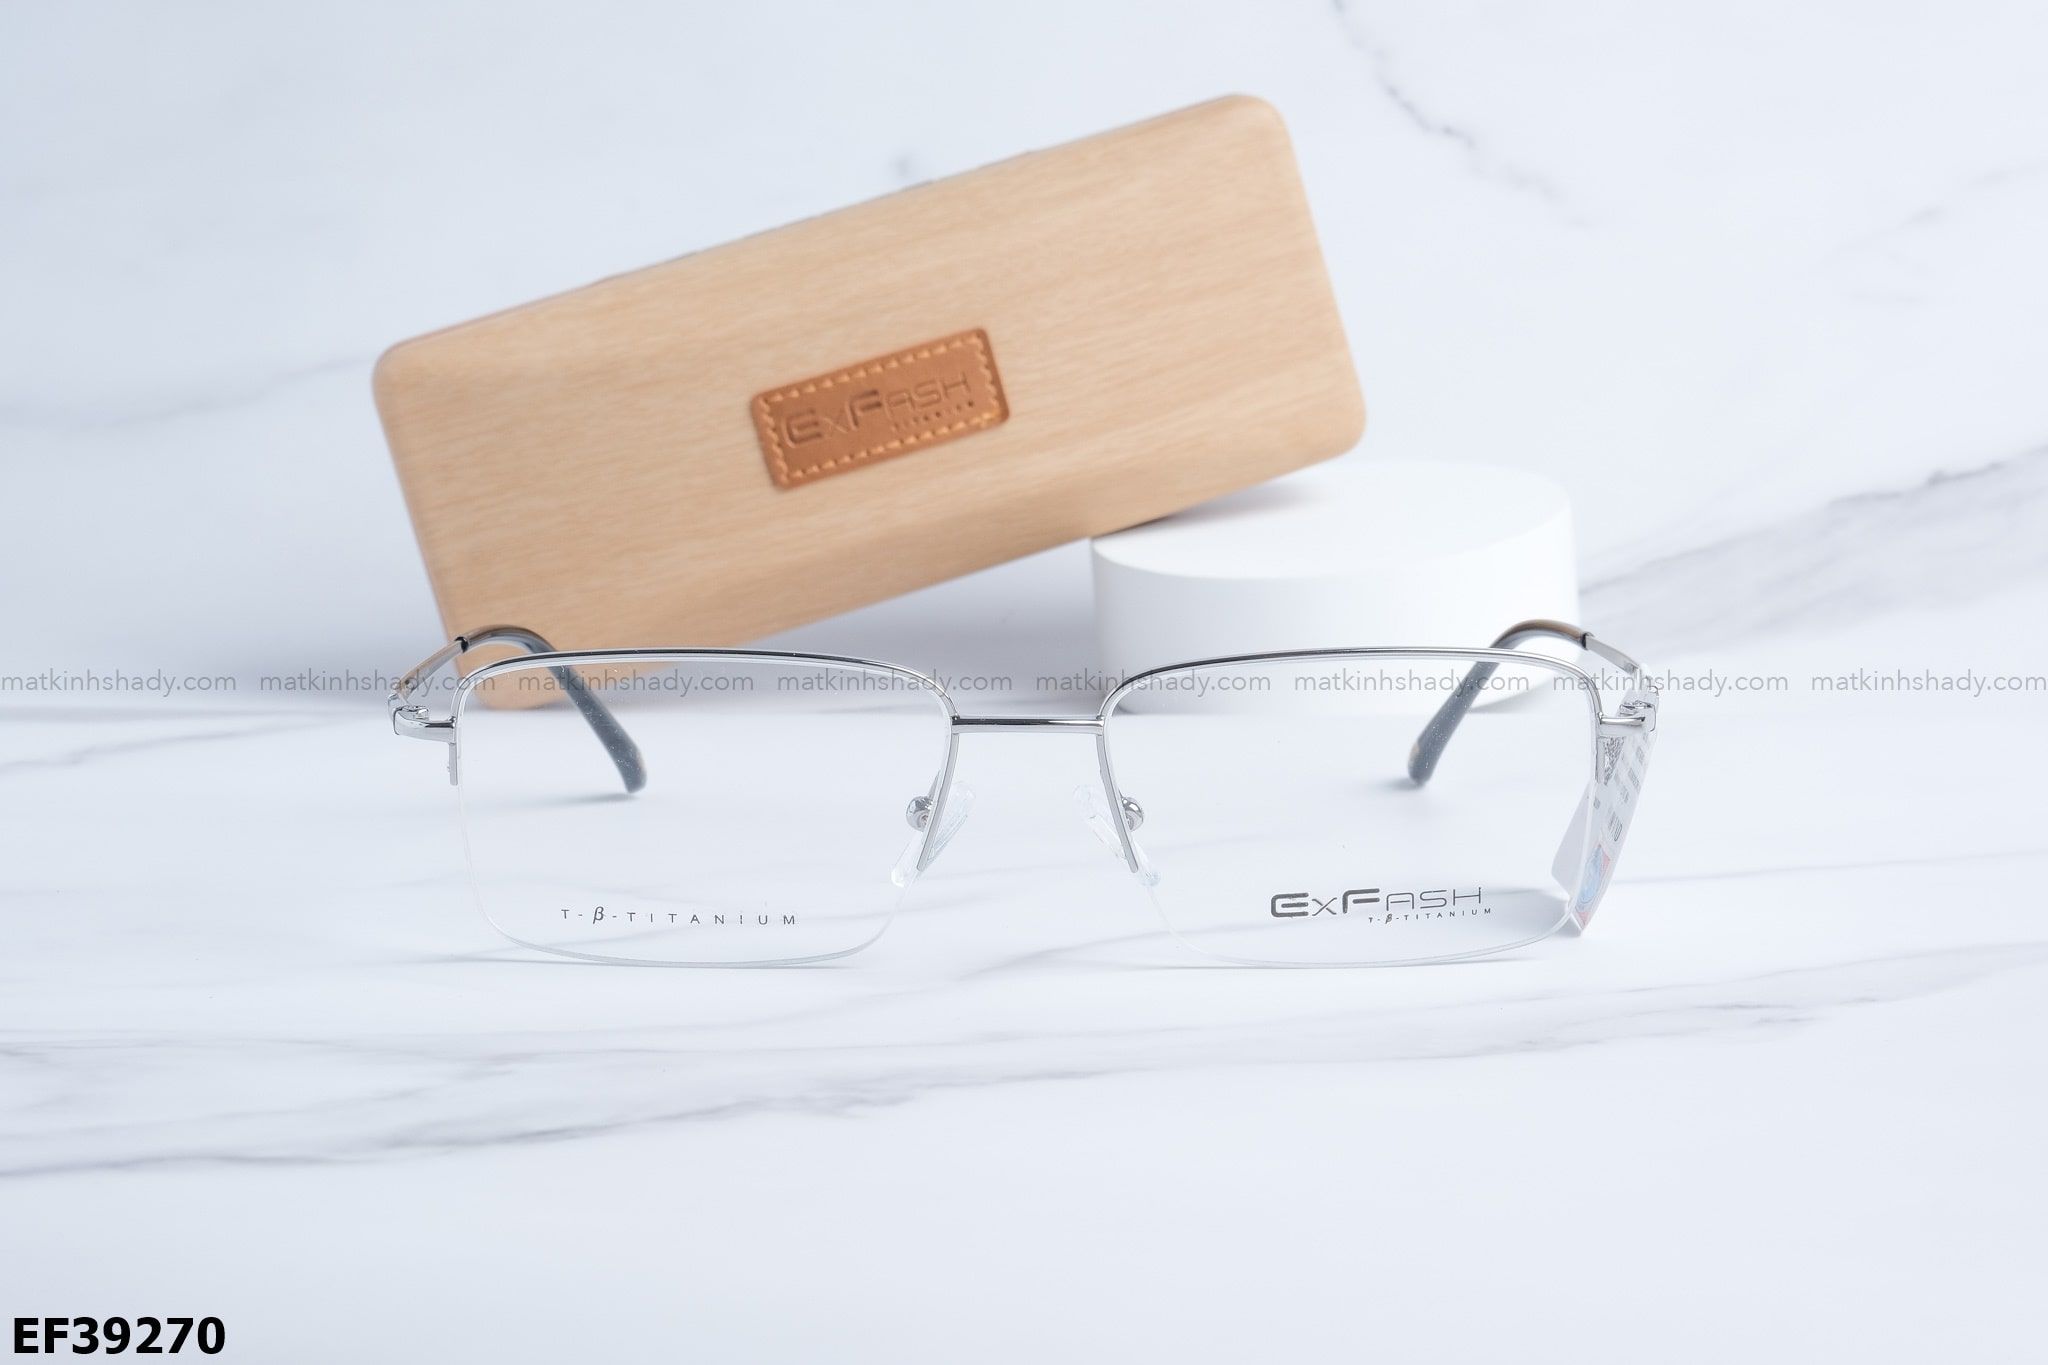  Exfash Eyewear - Glasses - EF39270 